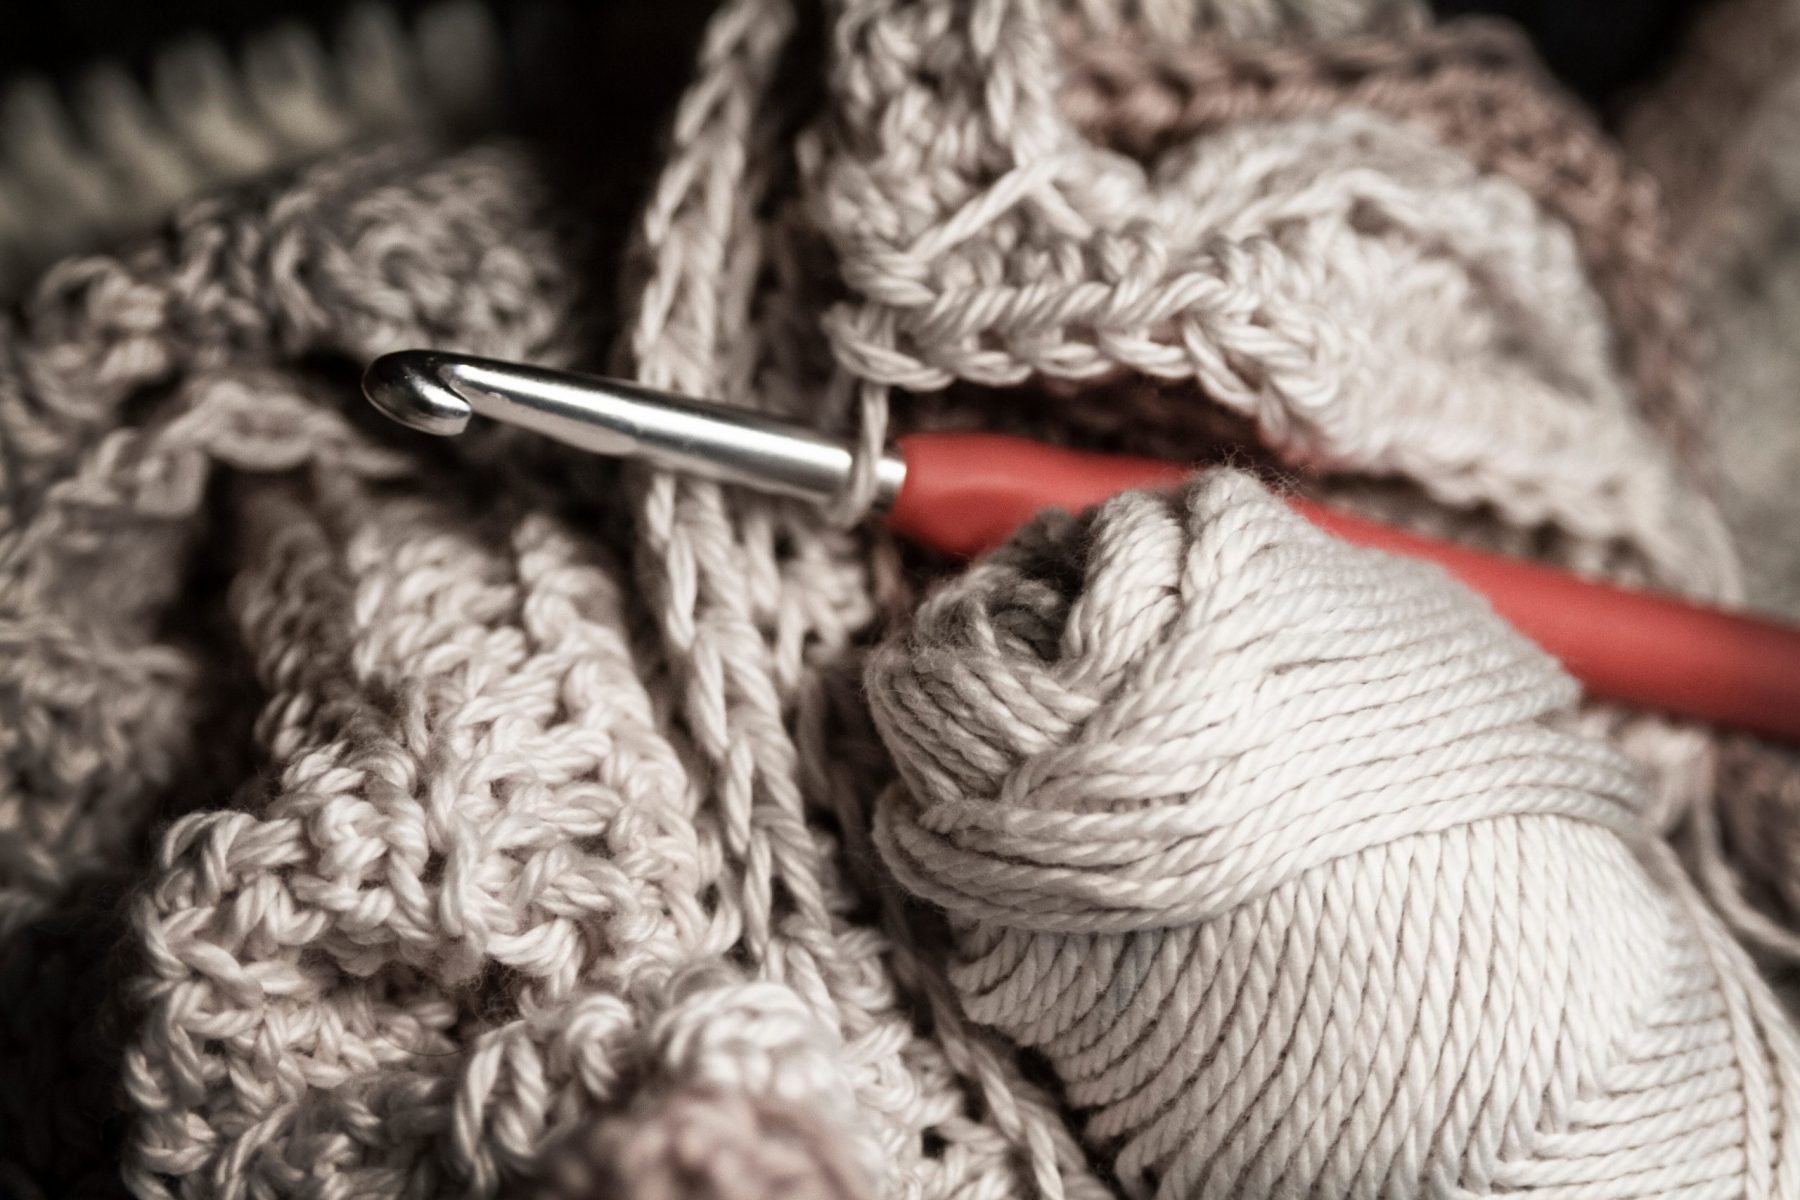 Chunky Yarn Hand Knitting and Crochet Forum